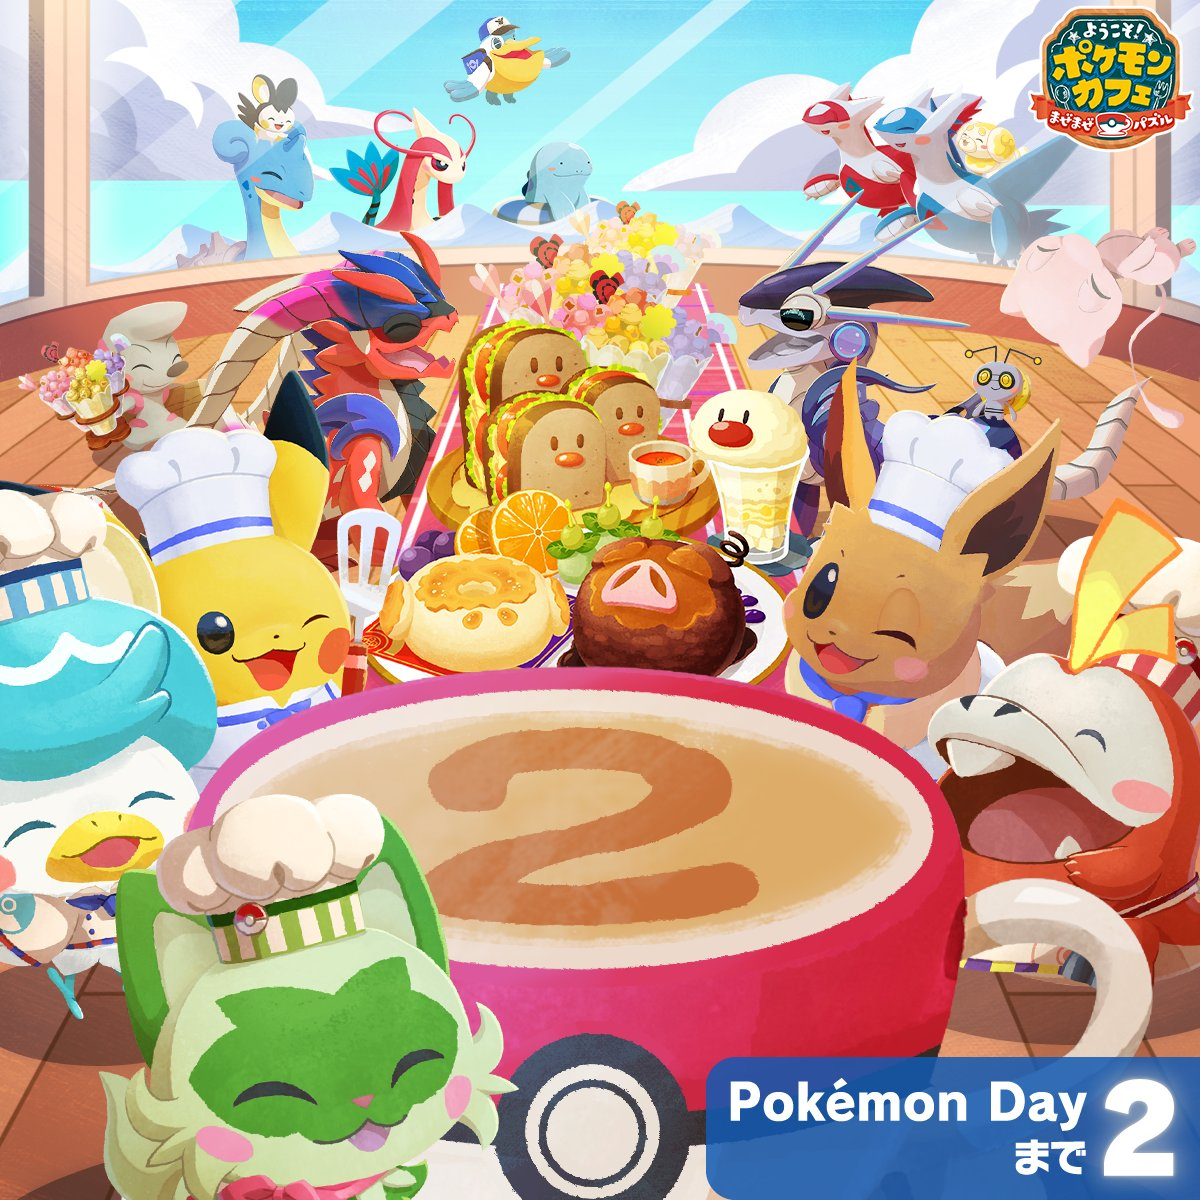 Pokémon Café ReMix Image released 2 days ahead of Pokémon Day